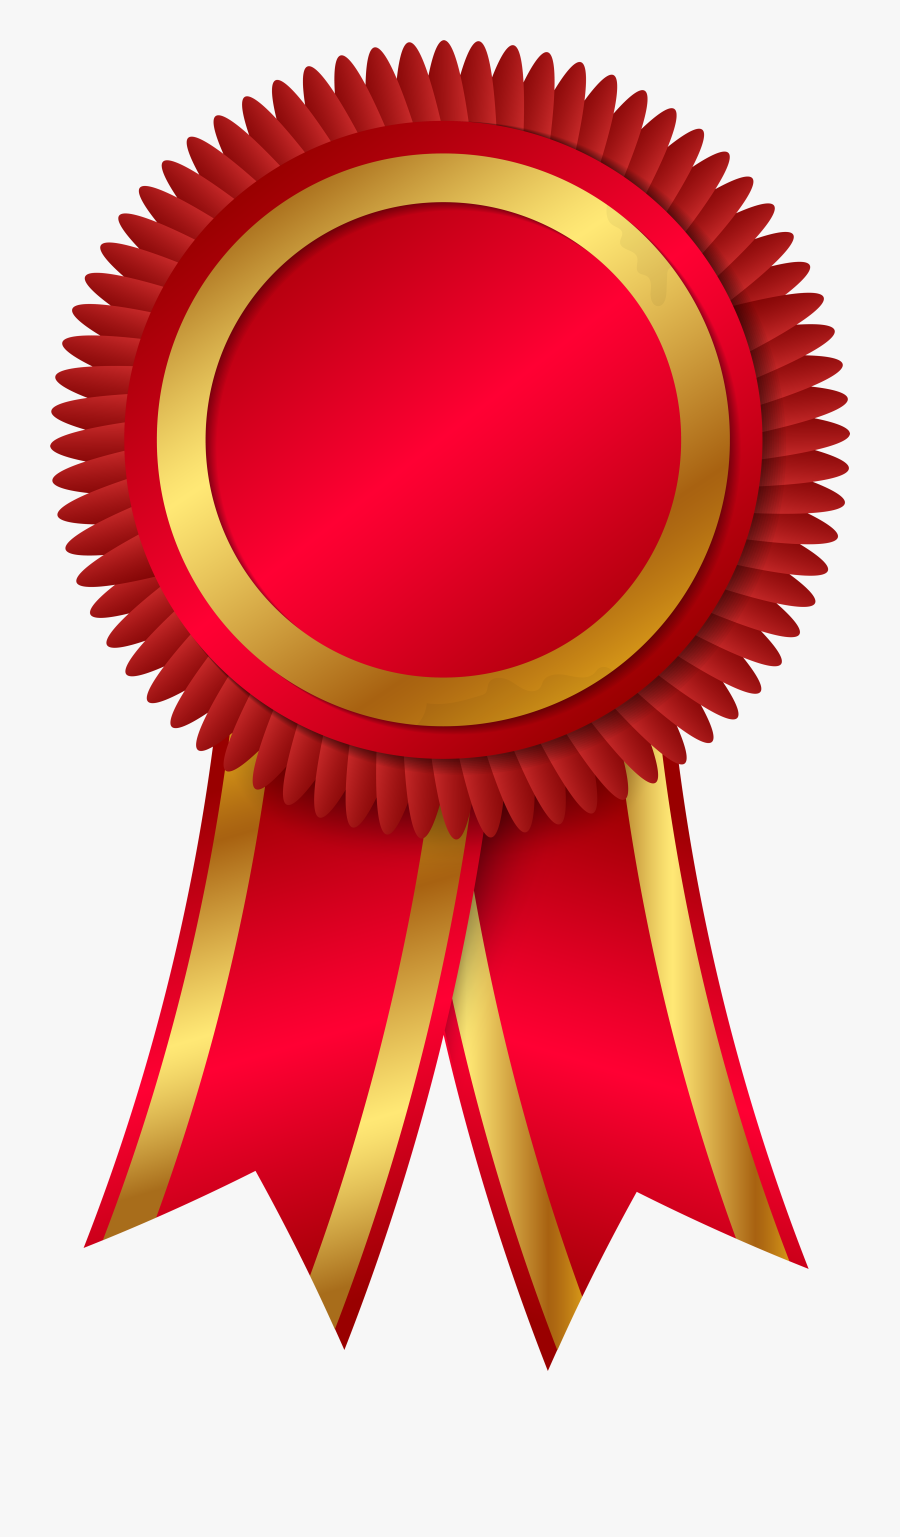 Golden Ribbon Rosette Award Cup Png Image High Quality - Rosette Png, Transparent Clipart